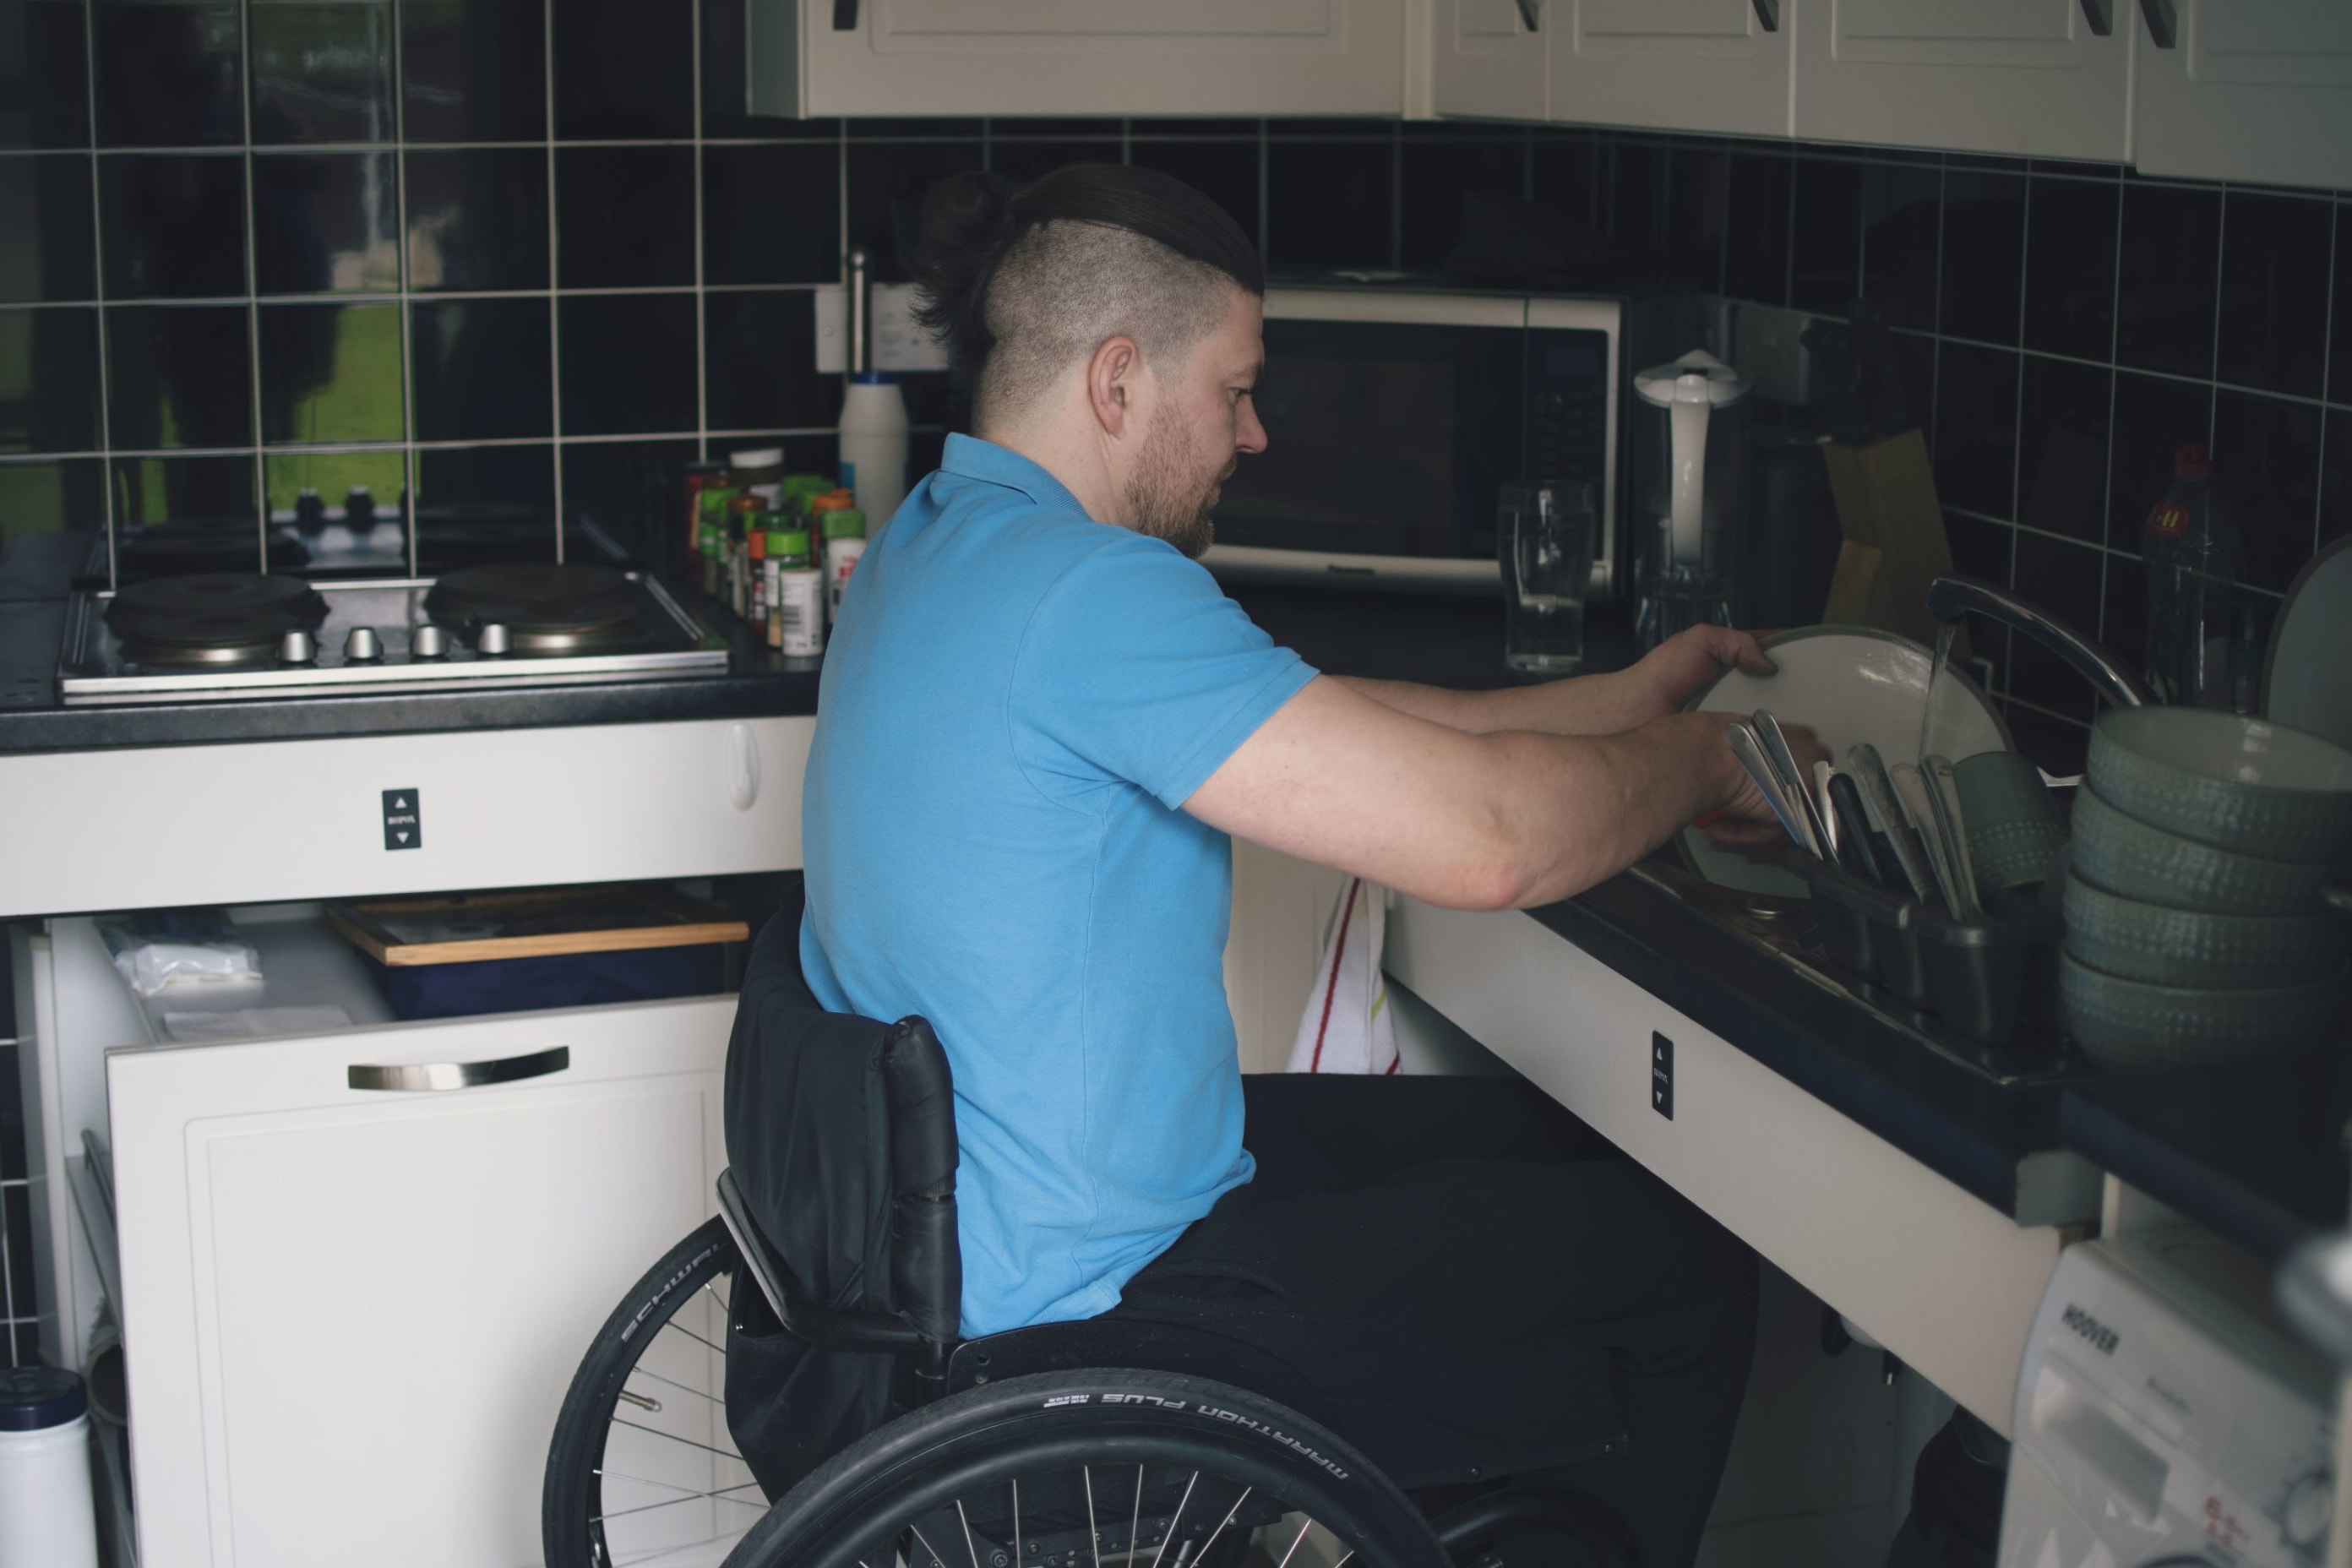 Einers in his wheelchair washing up